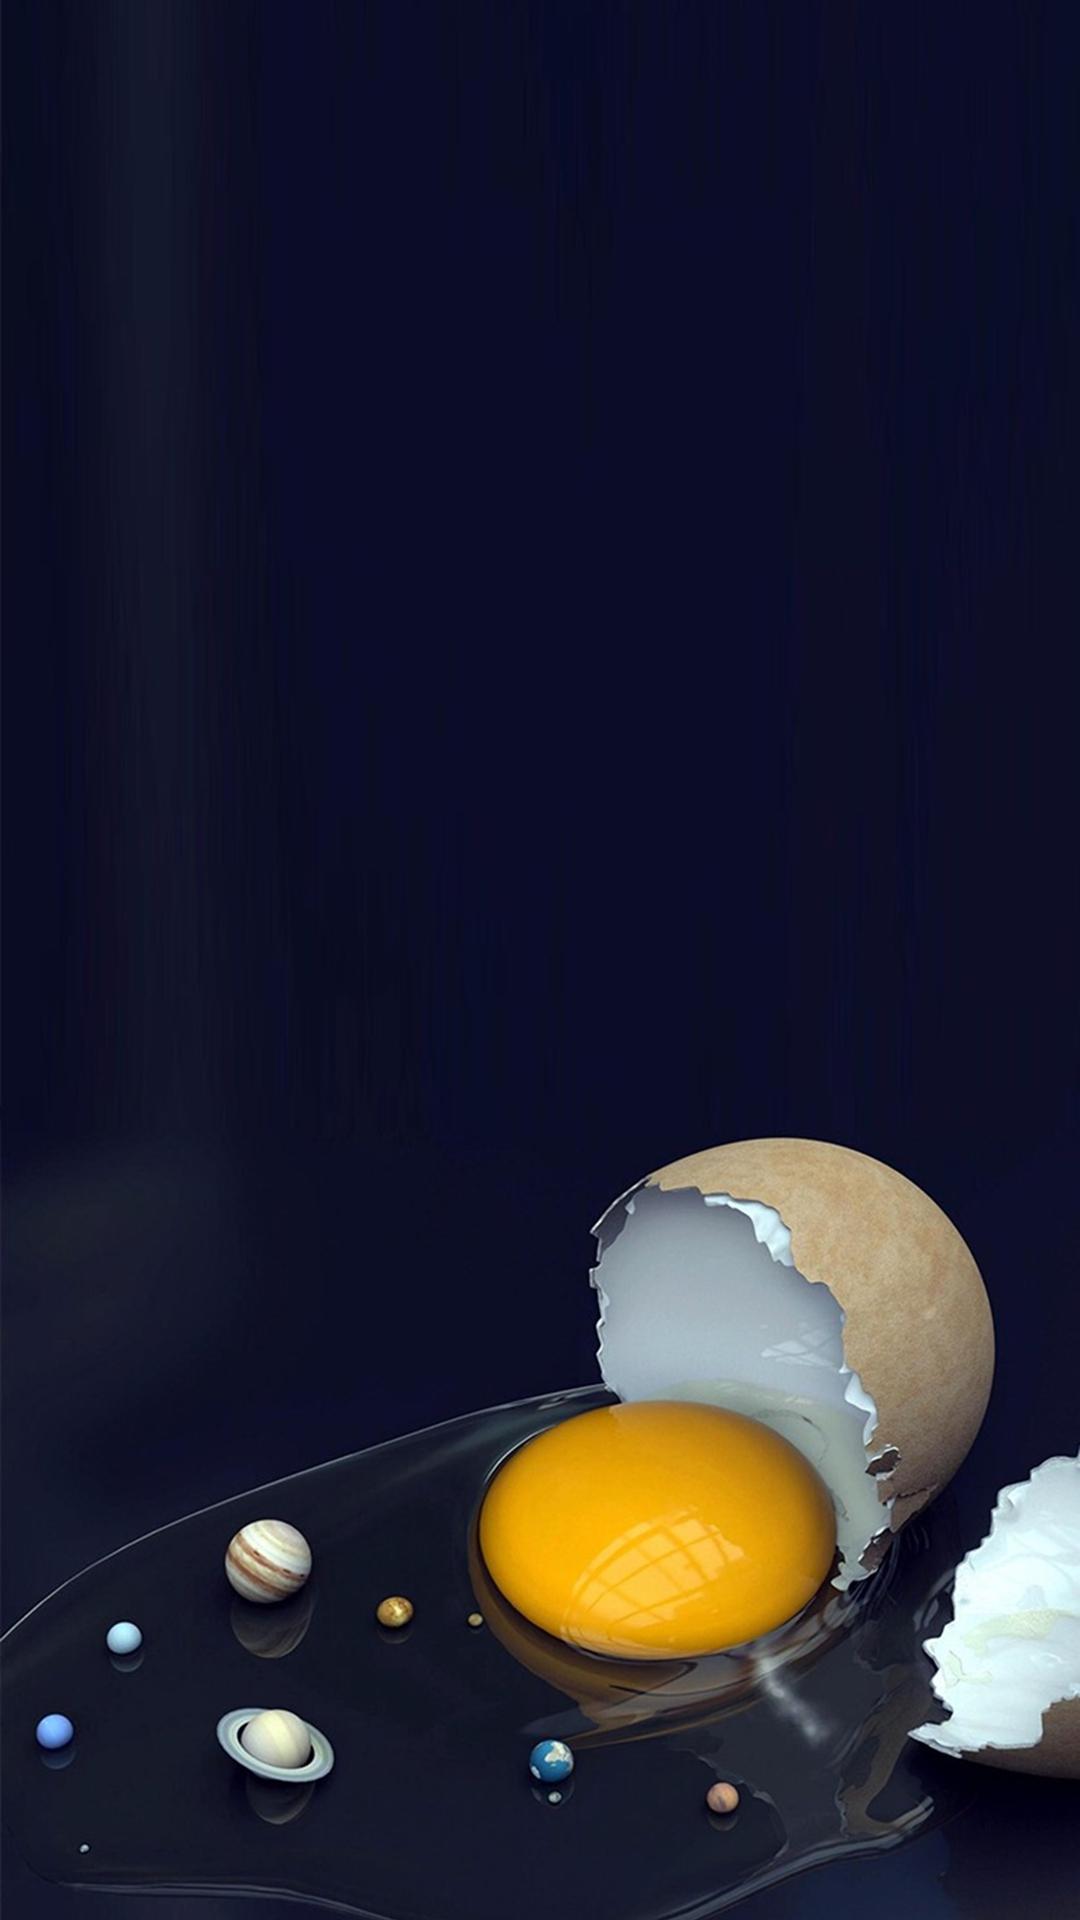 Solar System Broken Egg iPhone 8 Wallpaper Free Download